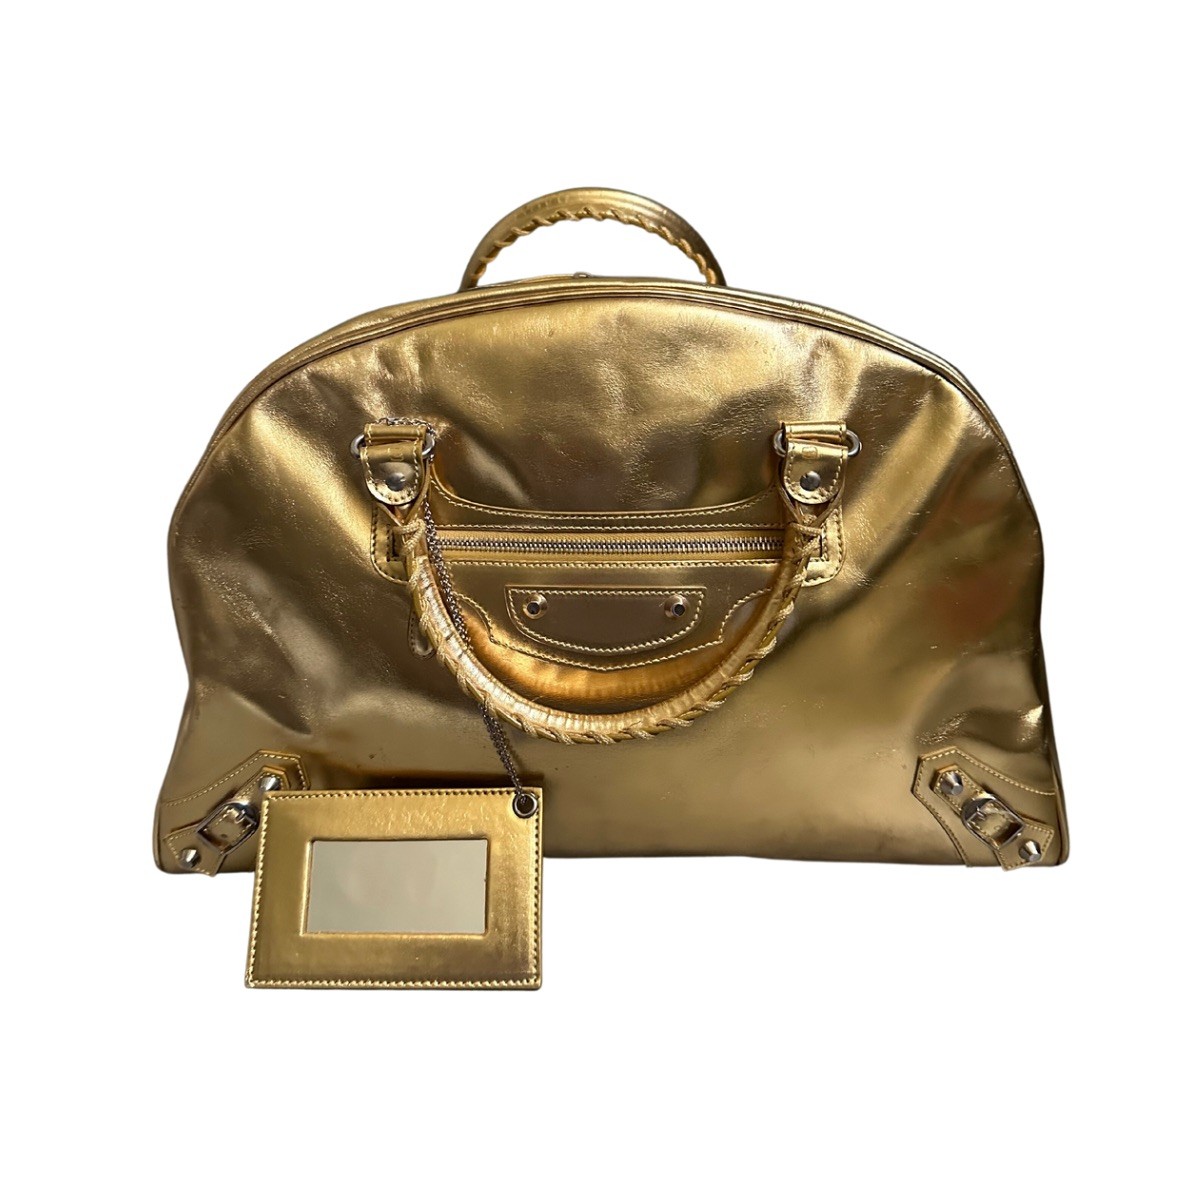 Guaranteed Authentic Balenciaga Weekender Bag  eBay